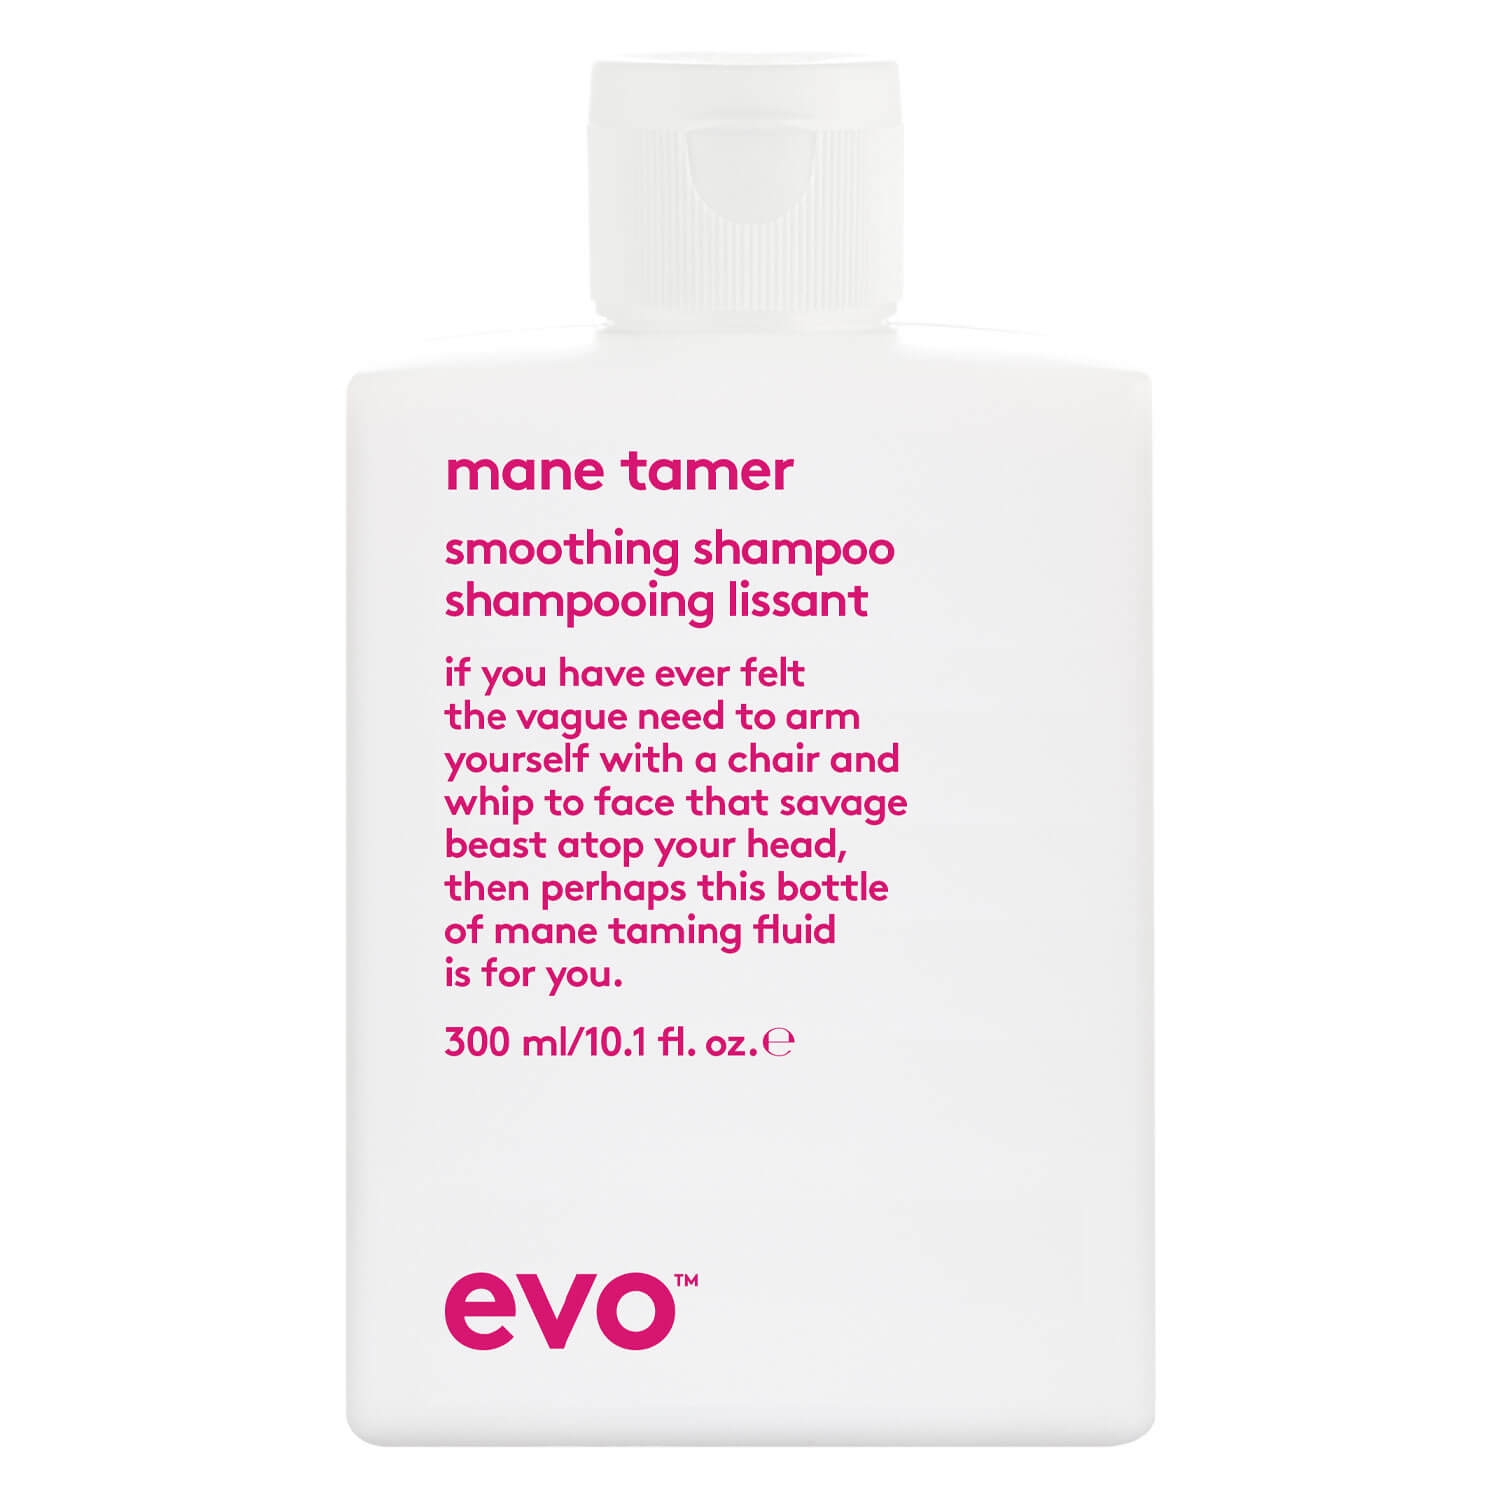 Produktbild von evo smooth - mane tamer smoothing shampoo